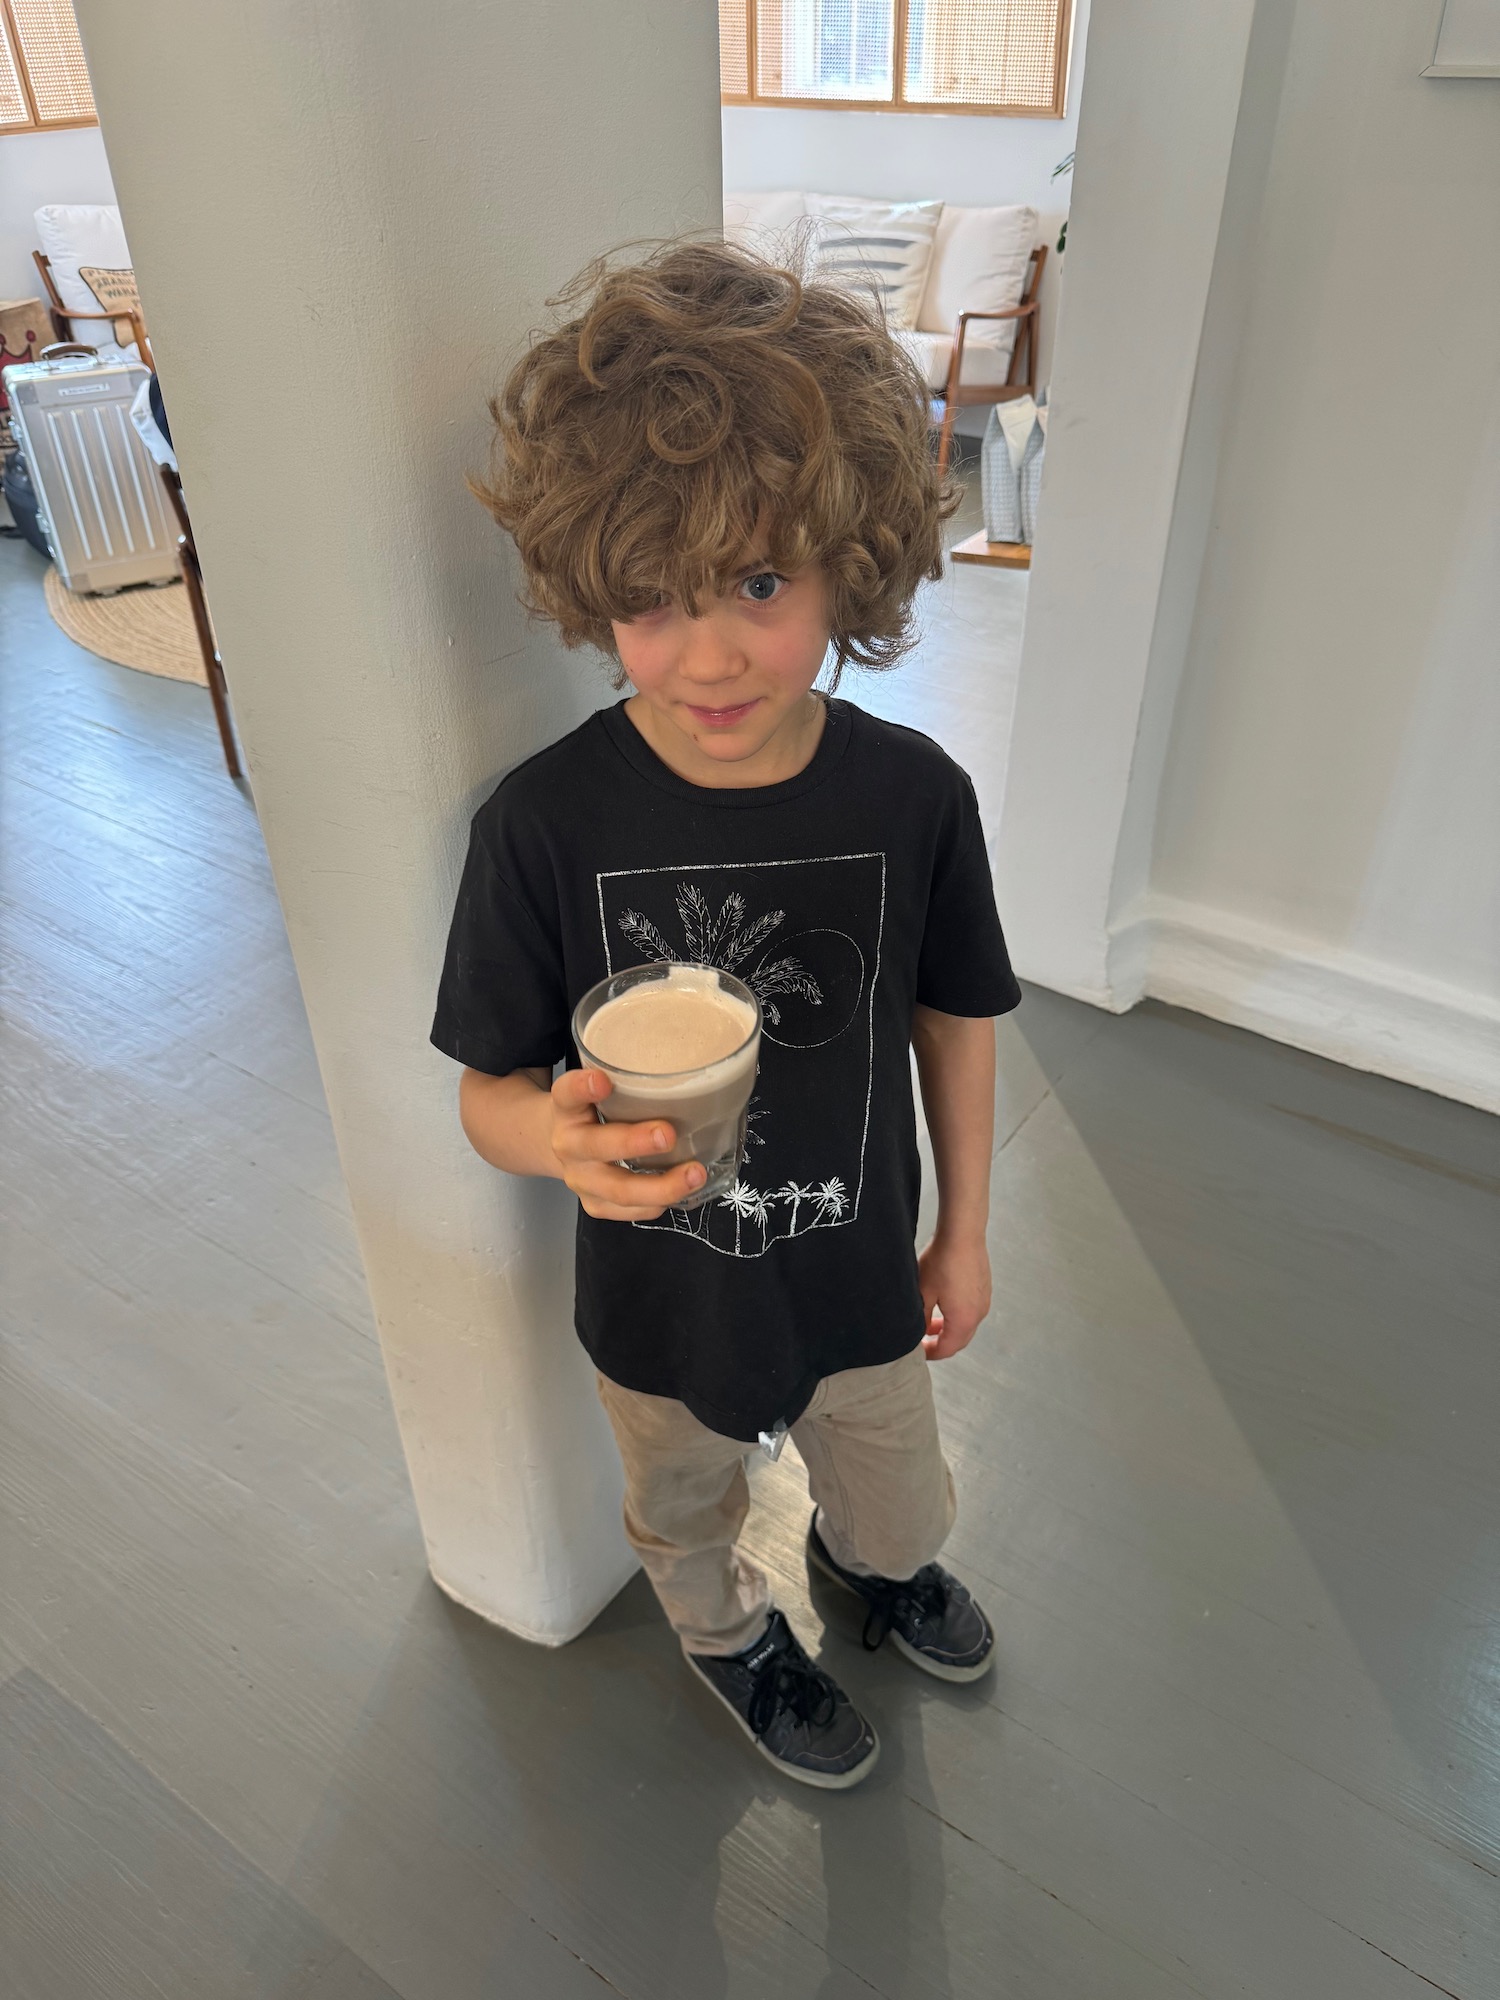 a boy holding a glass of milk